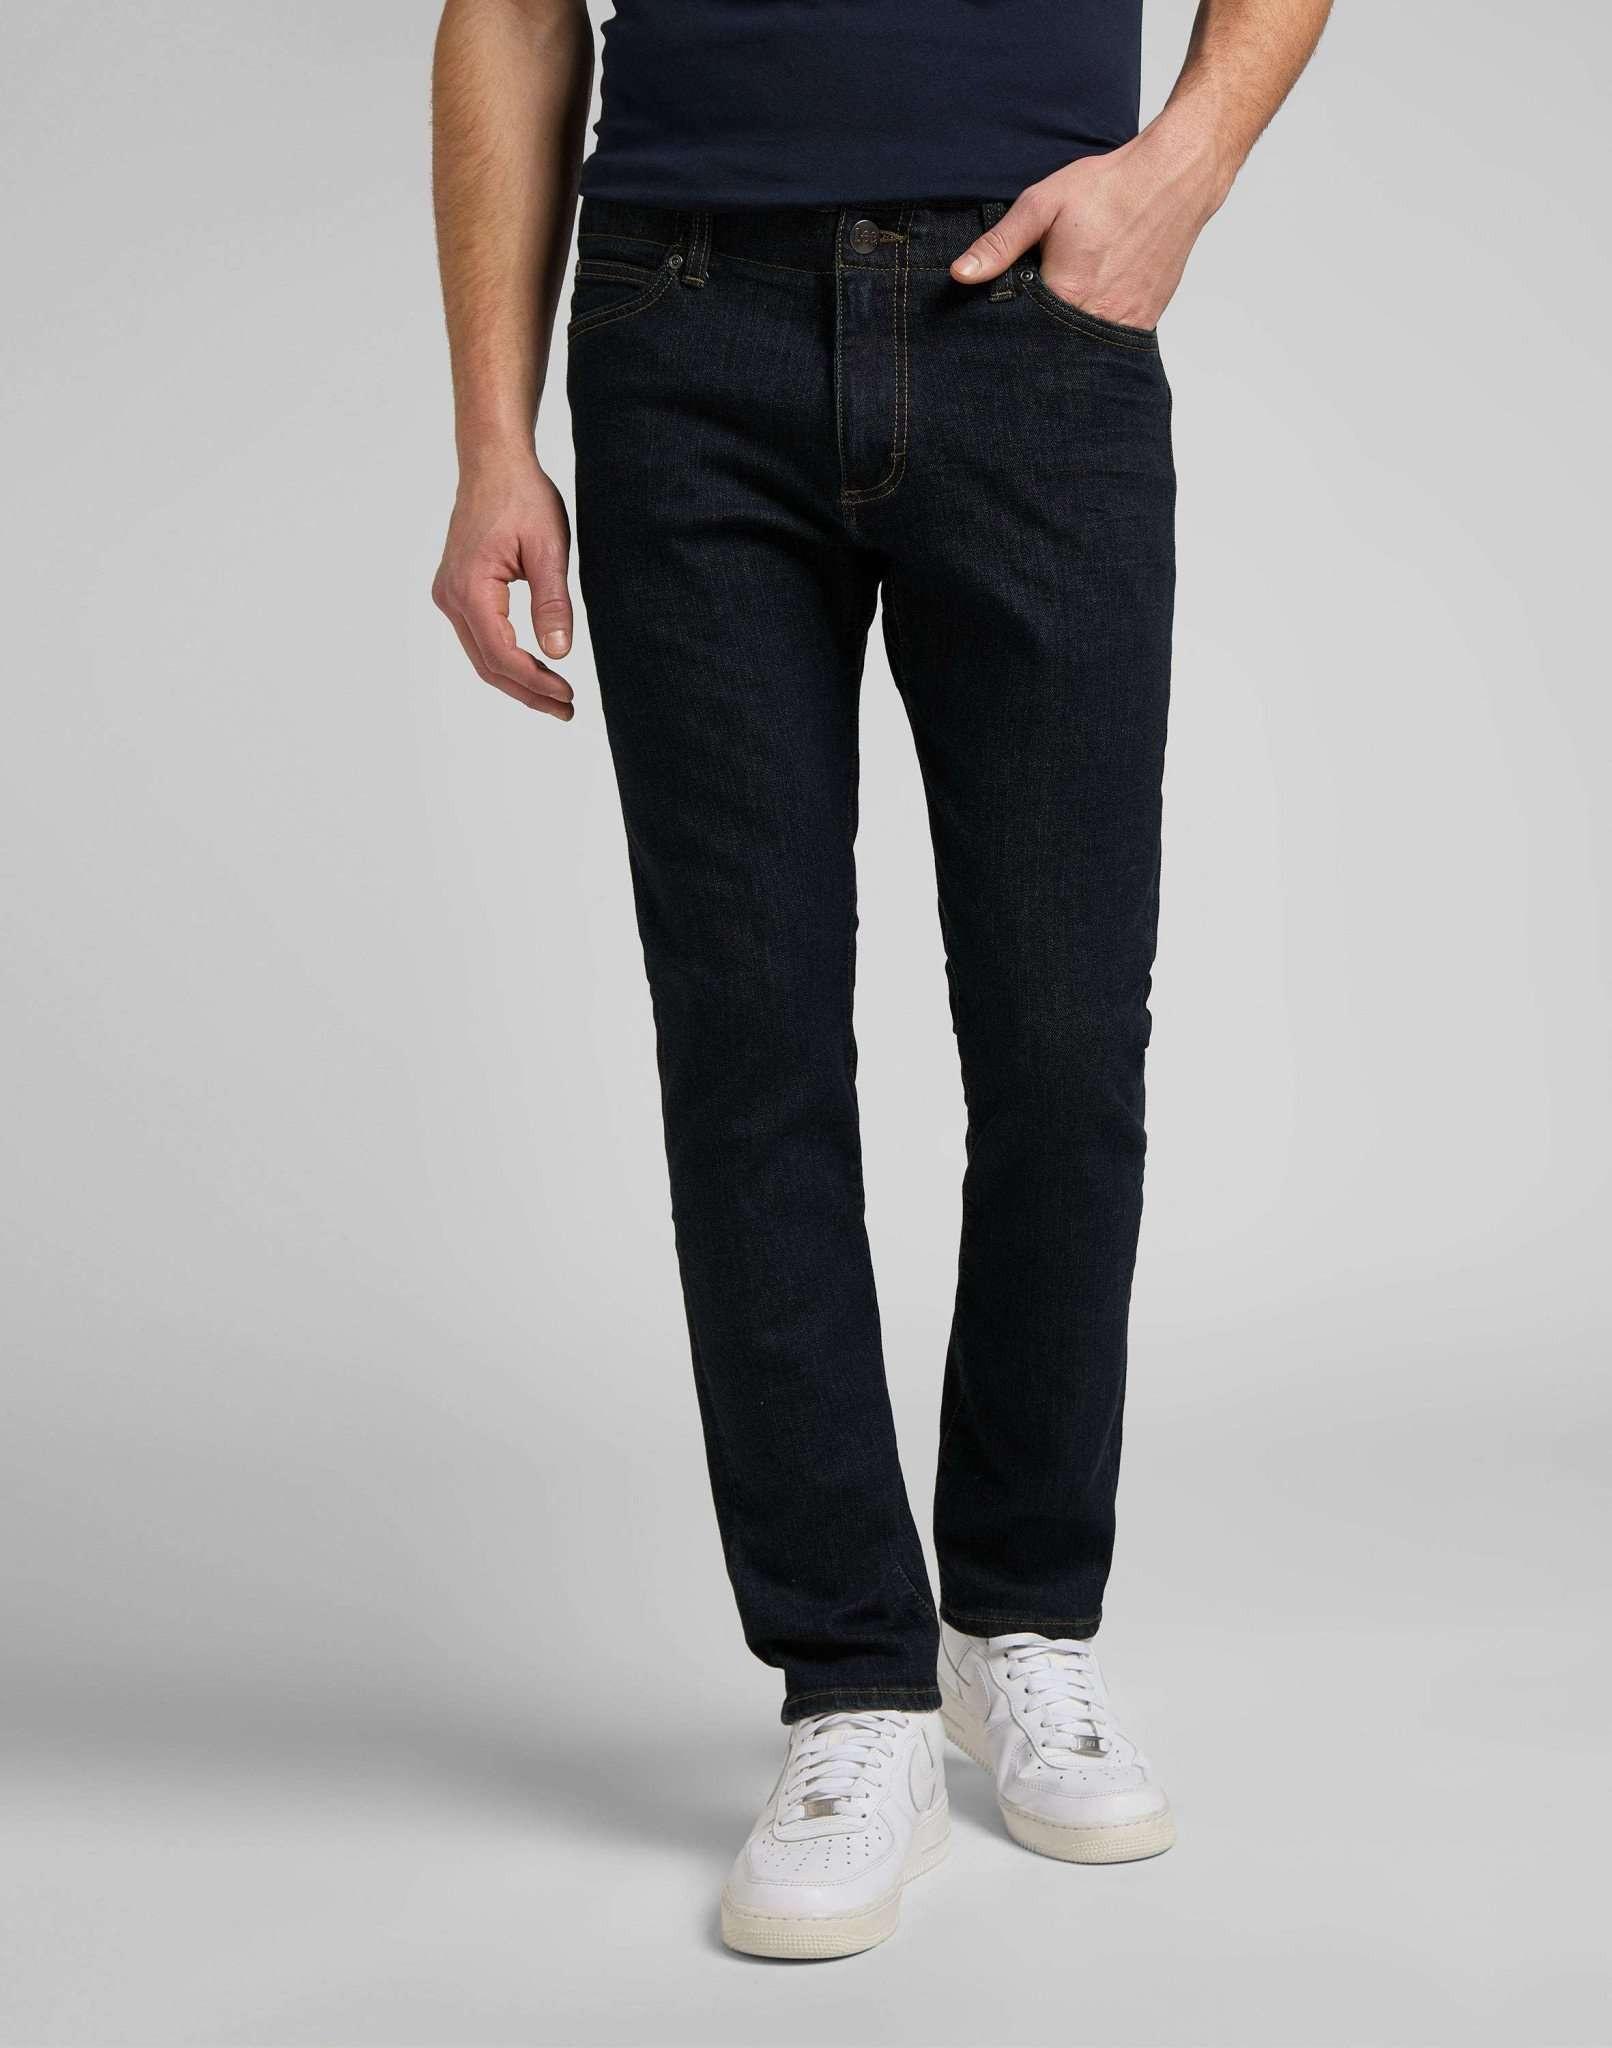 Jeans Skinny Fit Xm Herren Blau Denim L32/W32 von Lee